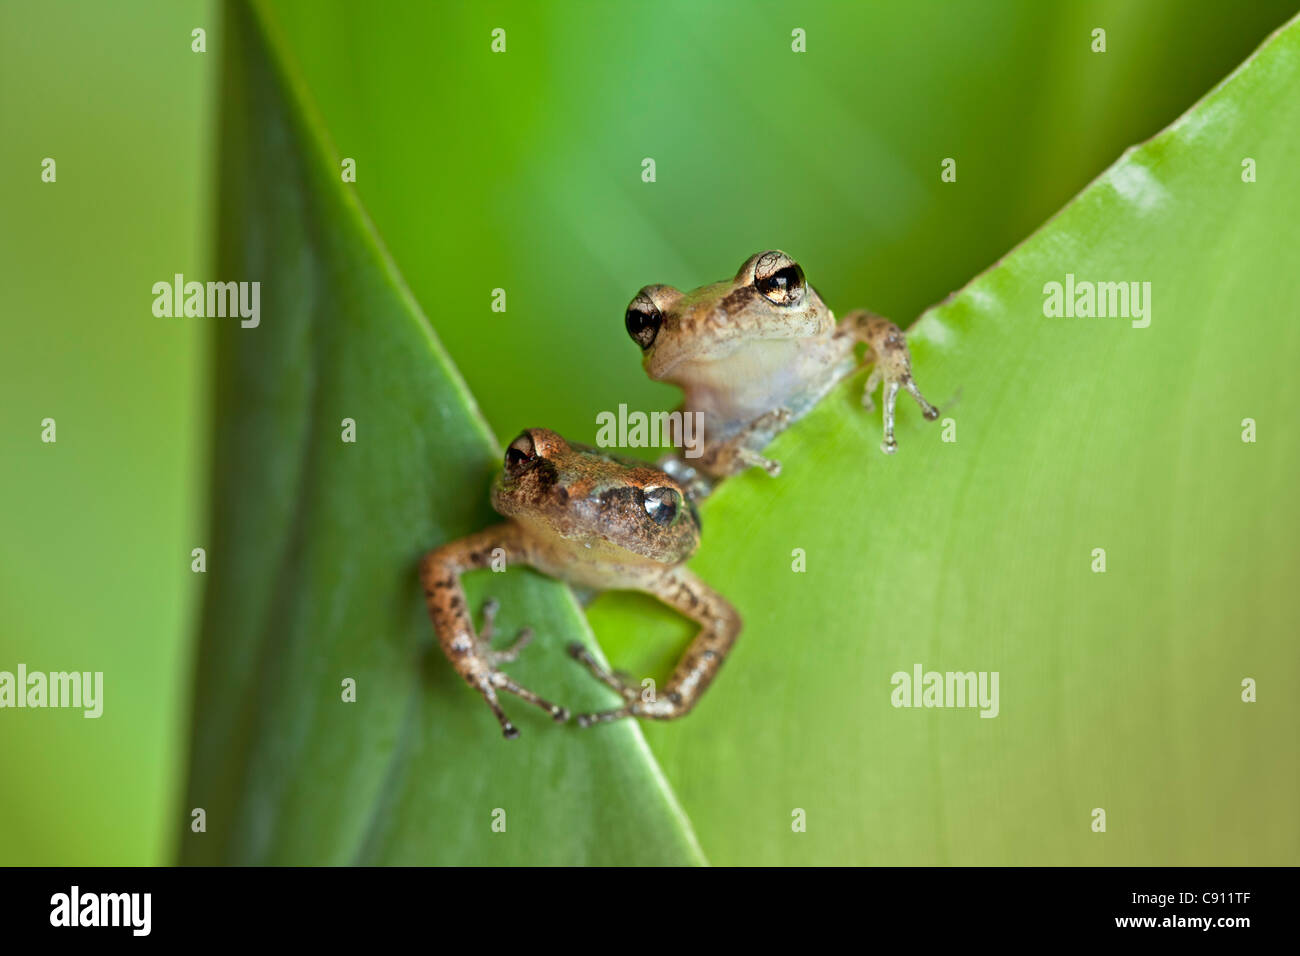 Países Bajos, Windwardside, Isla de Saba, Caribe Holandés. Silbido Tree Frog ( Eleutherodactylus johnstonei ) Heliconia planta. Foto de stock